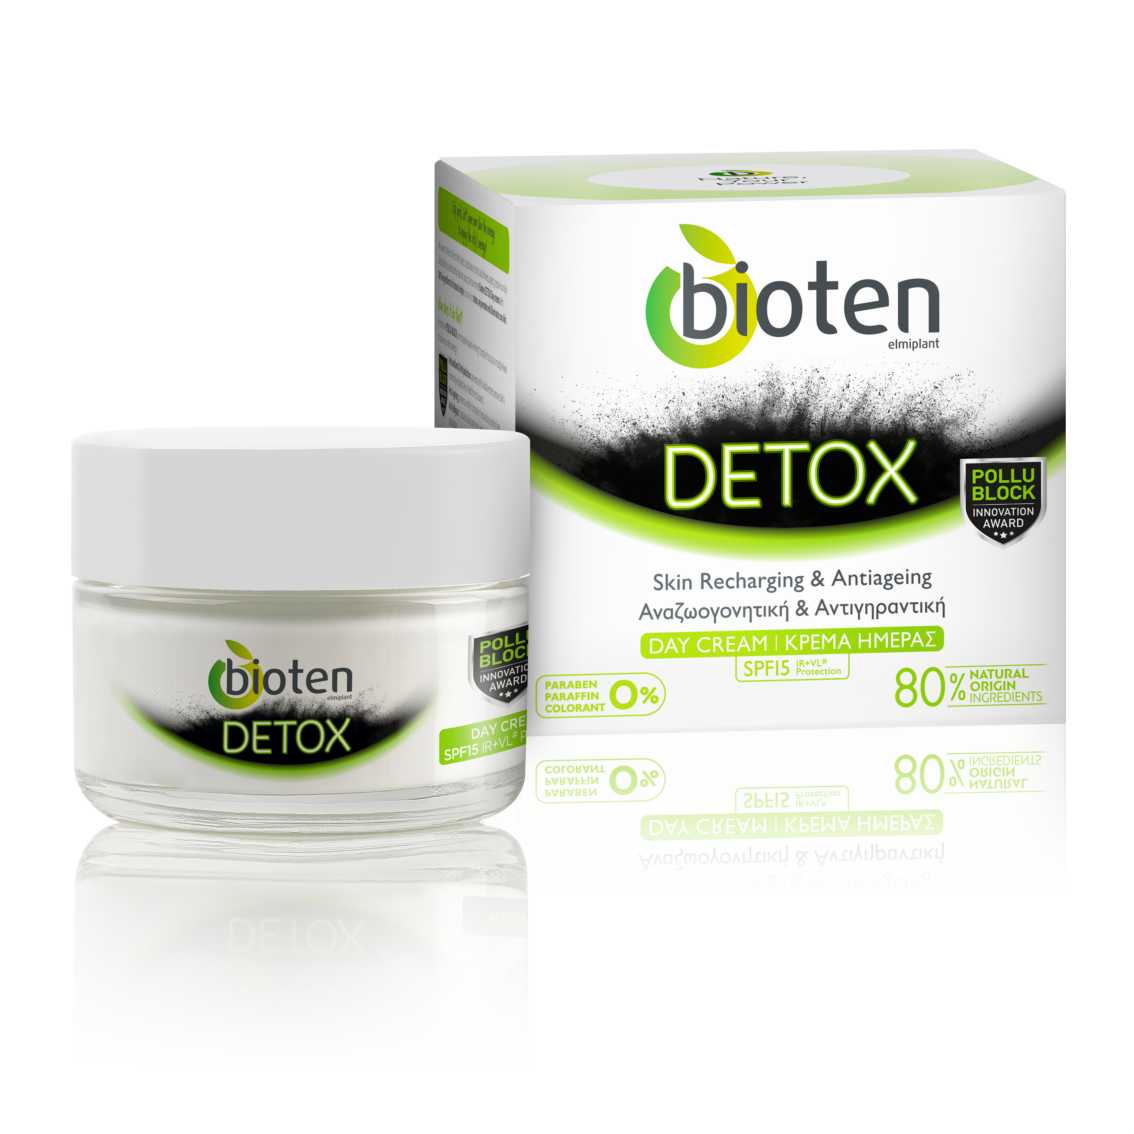 bioten detox day1 0